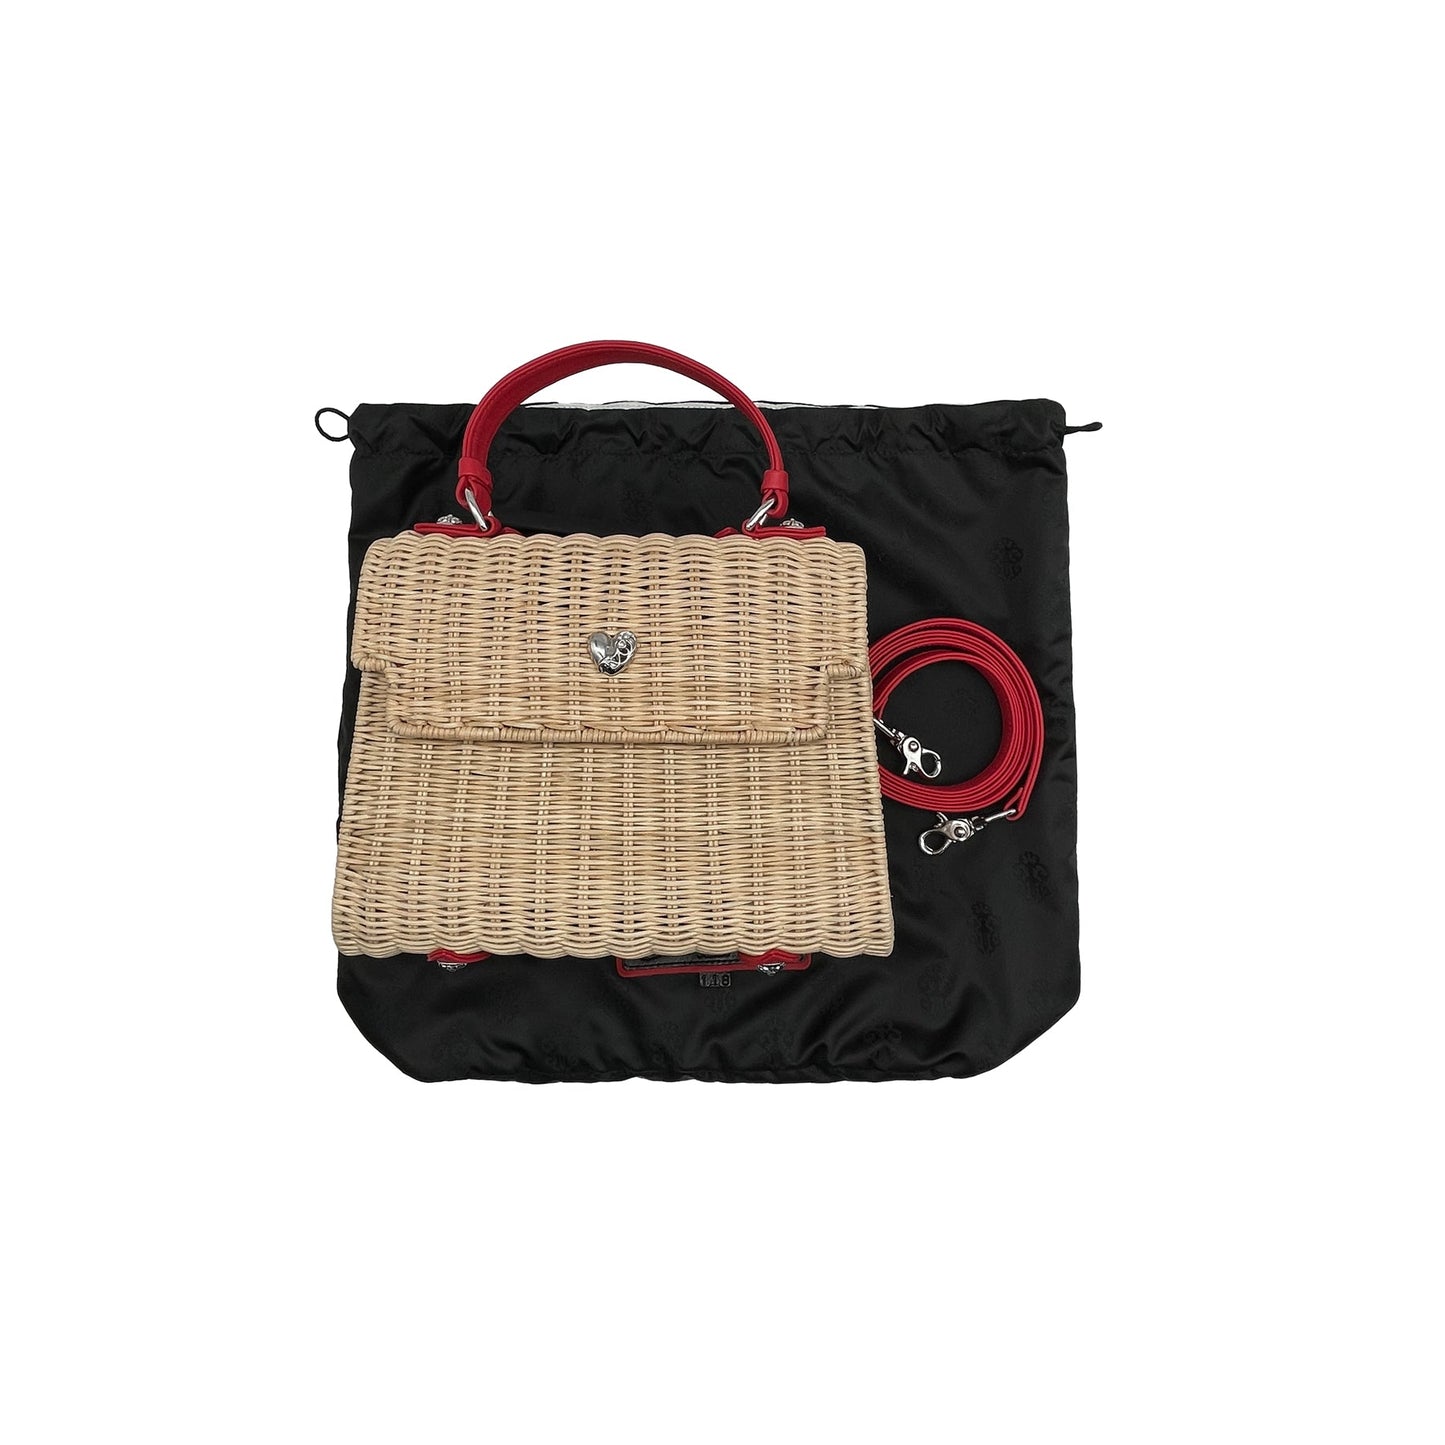 Chrome Hearts Basket-Weave Red Leather Vine Heart Wicker Bag - SHENGLI ROAD MARKET